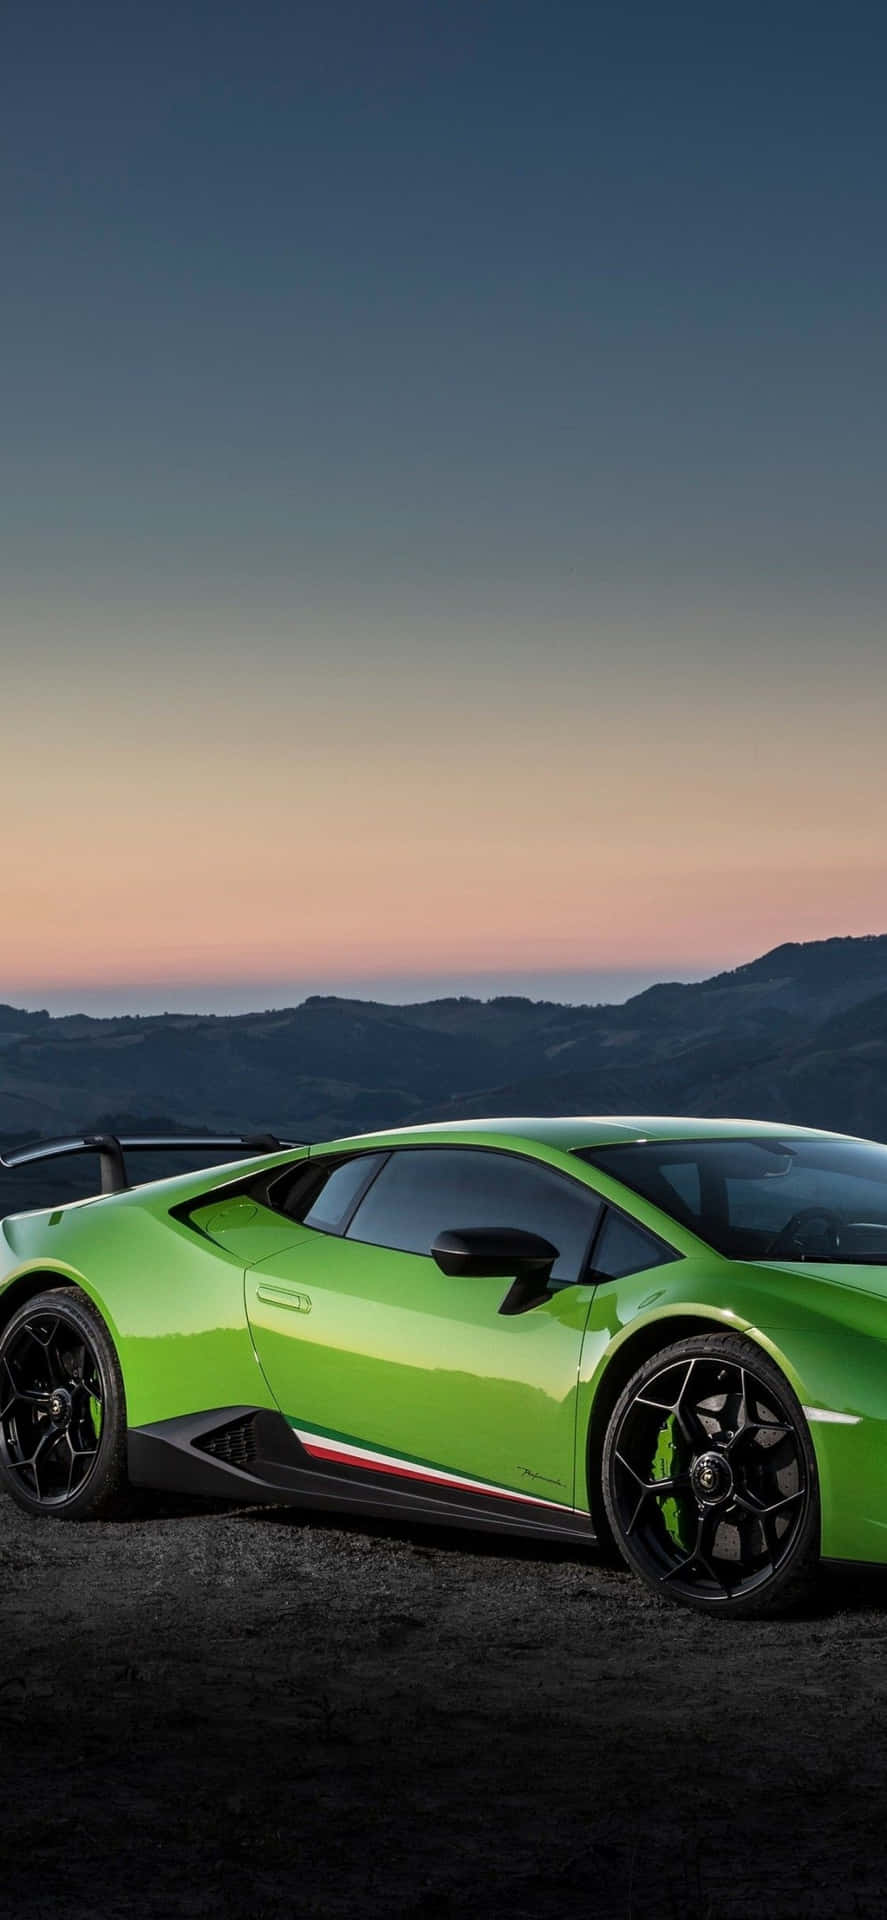 Enjoy a Ride in a Green Lamborghini Wallpaper